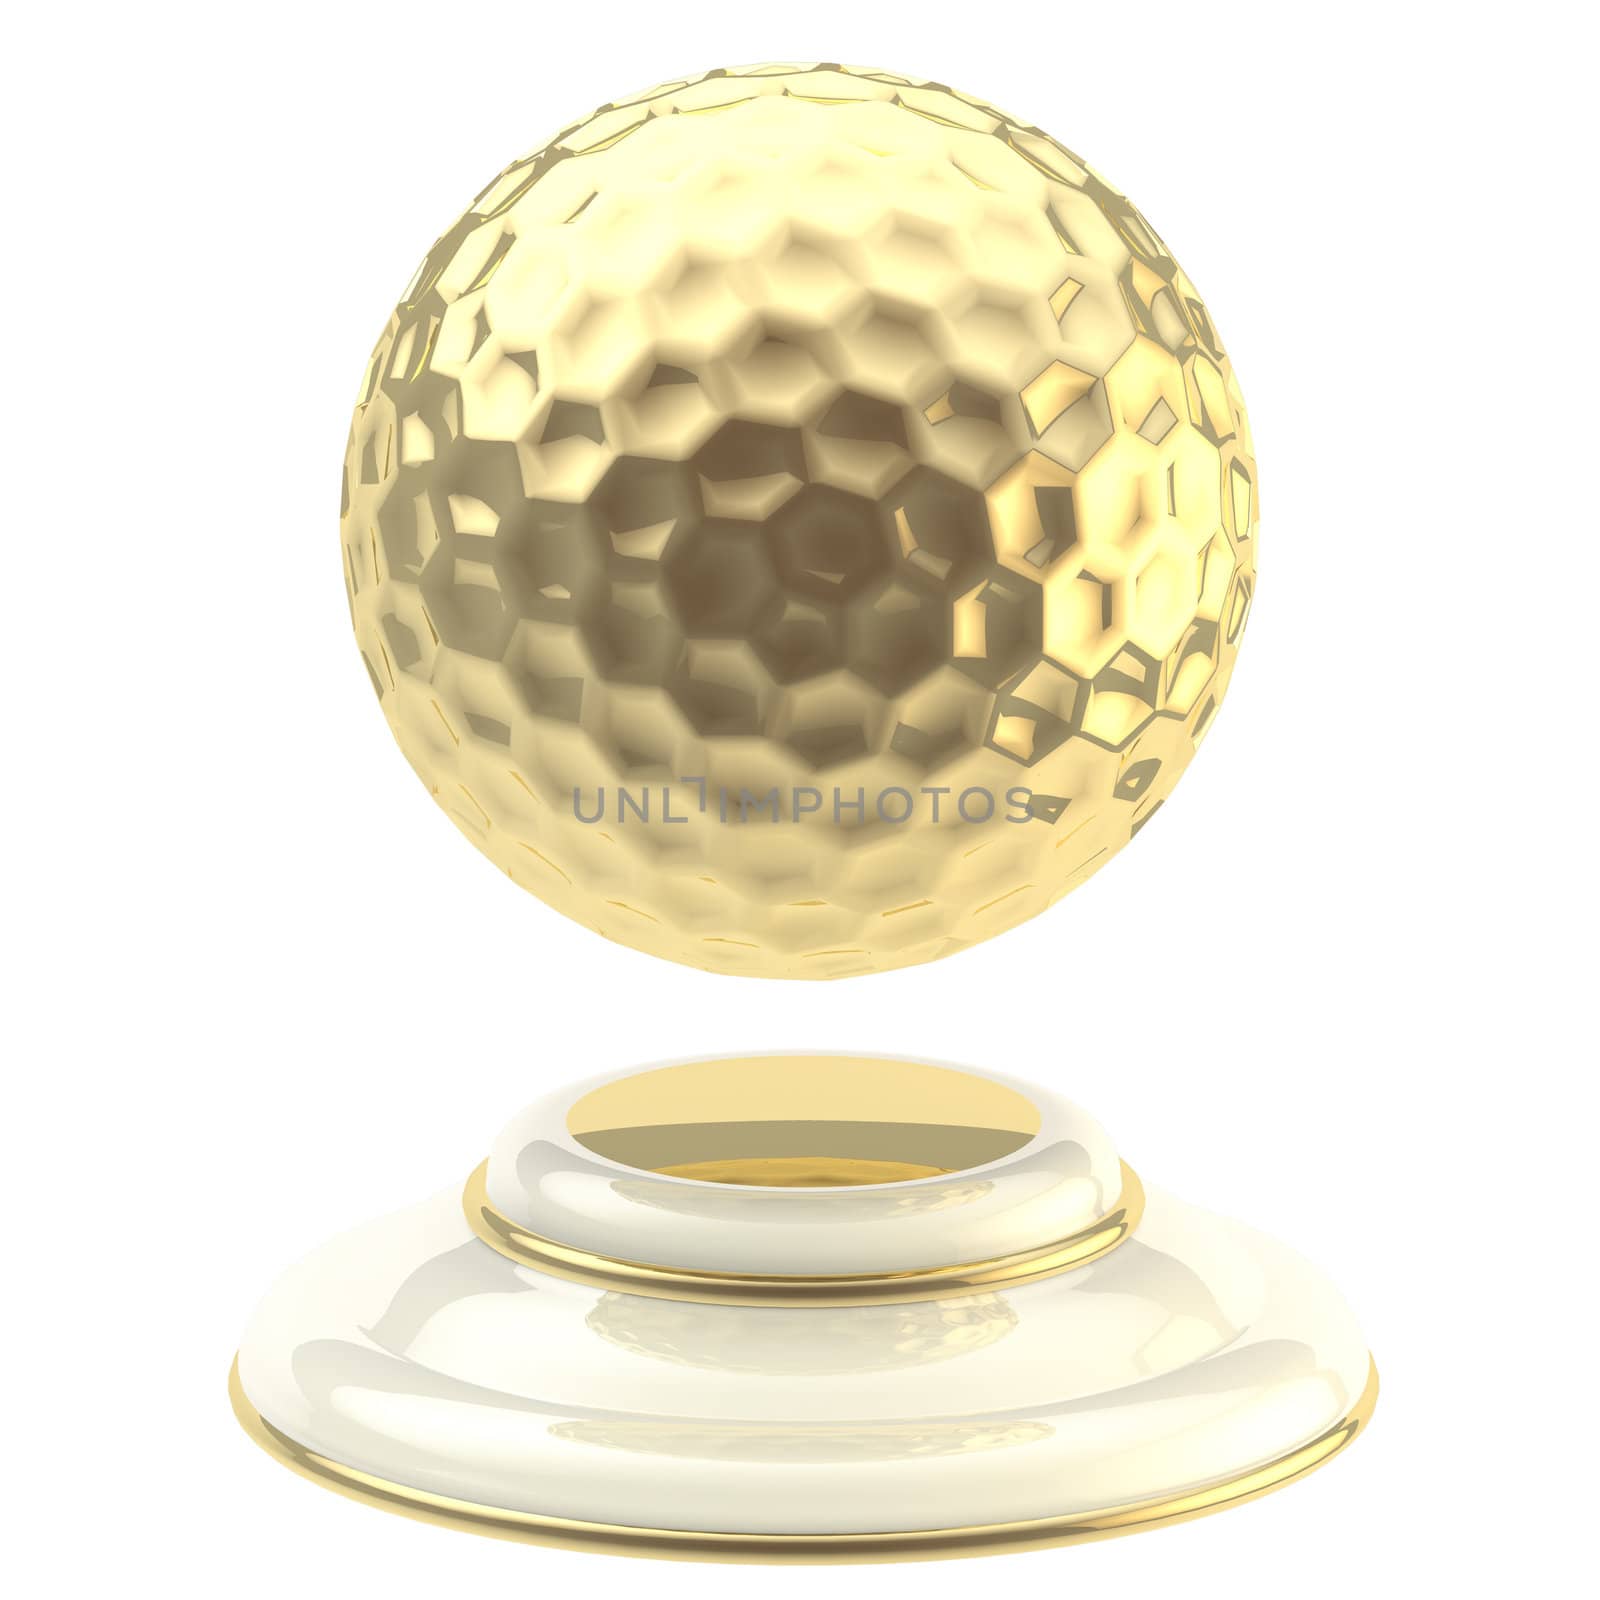 Golden golf ball champion goblet isolated on white